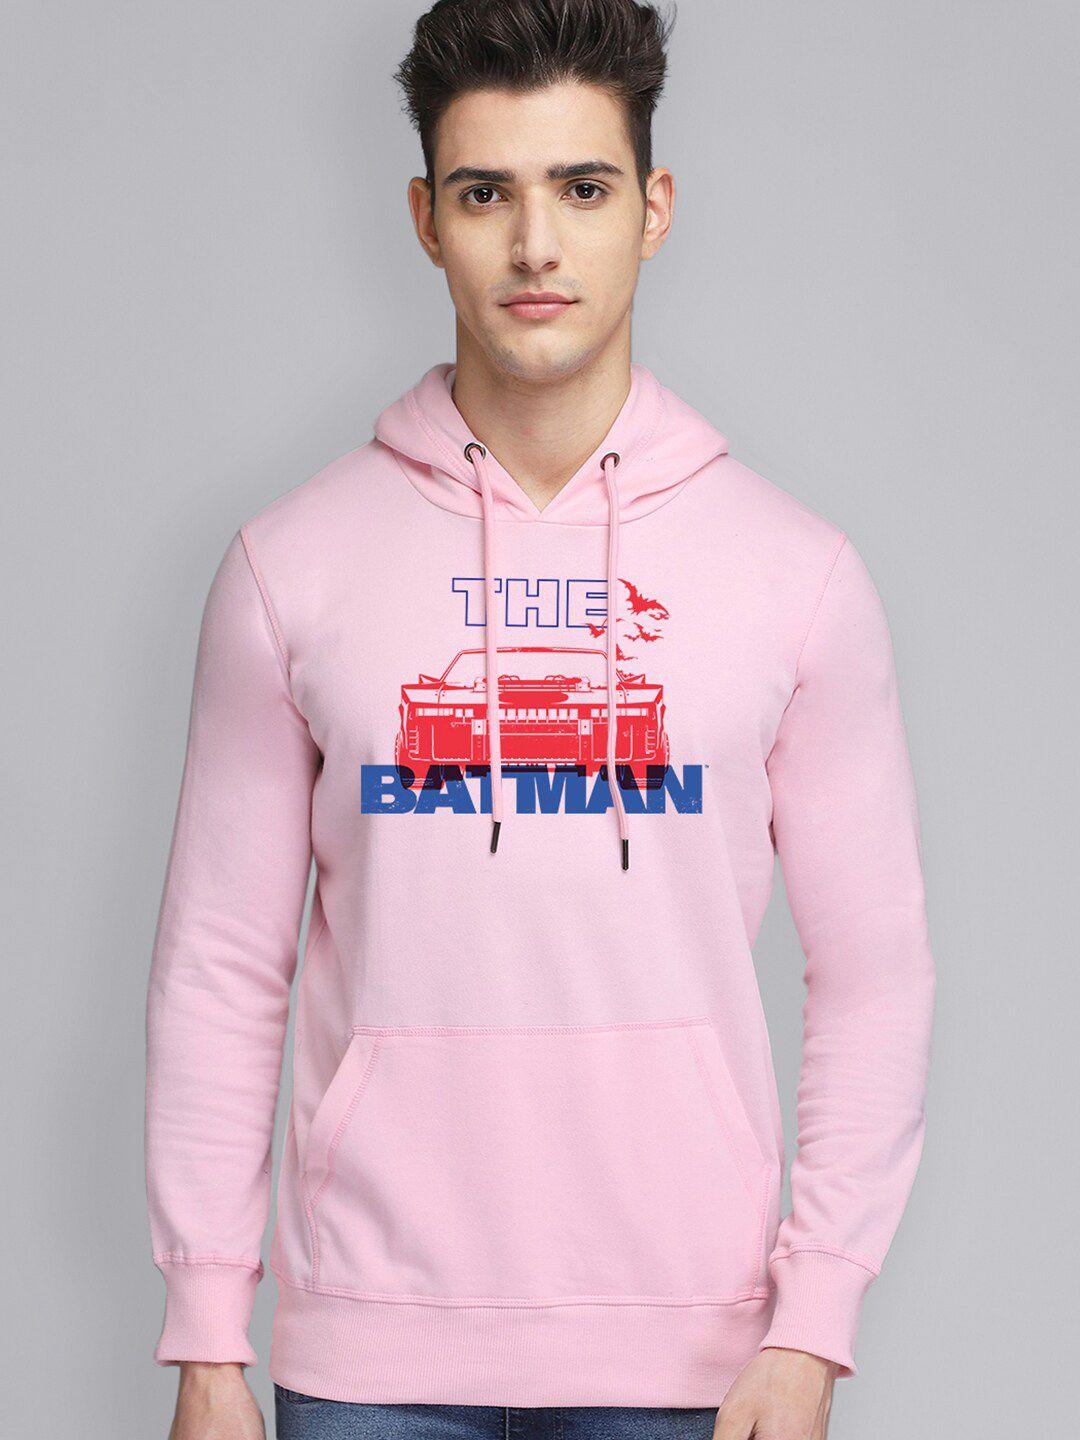 free-authority-men-super-hero-batman-printed-hooded-sweatshirt